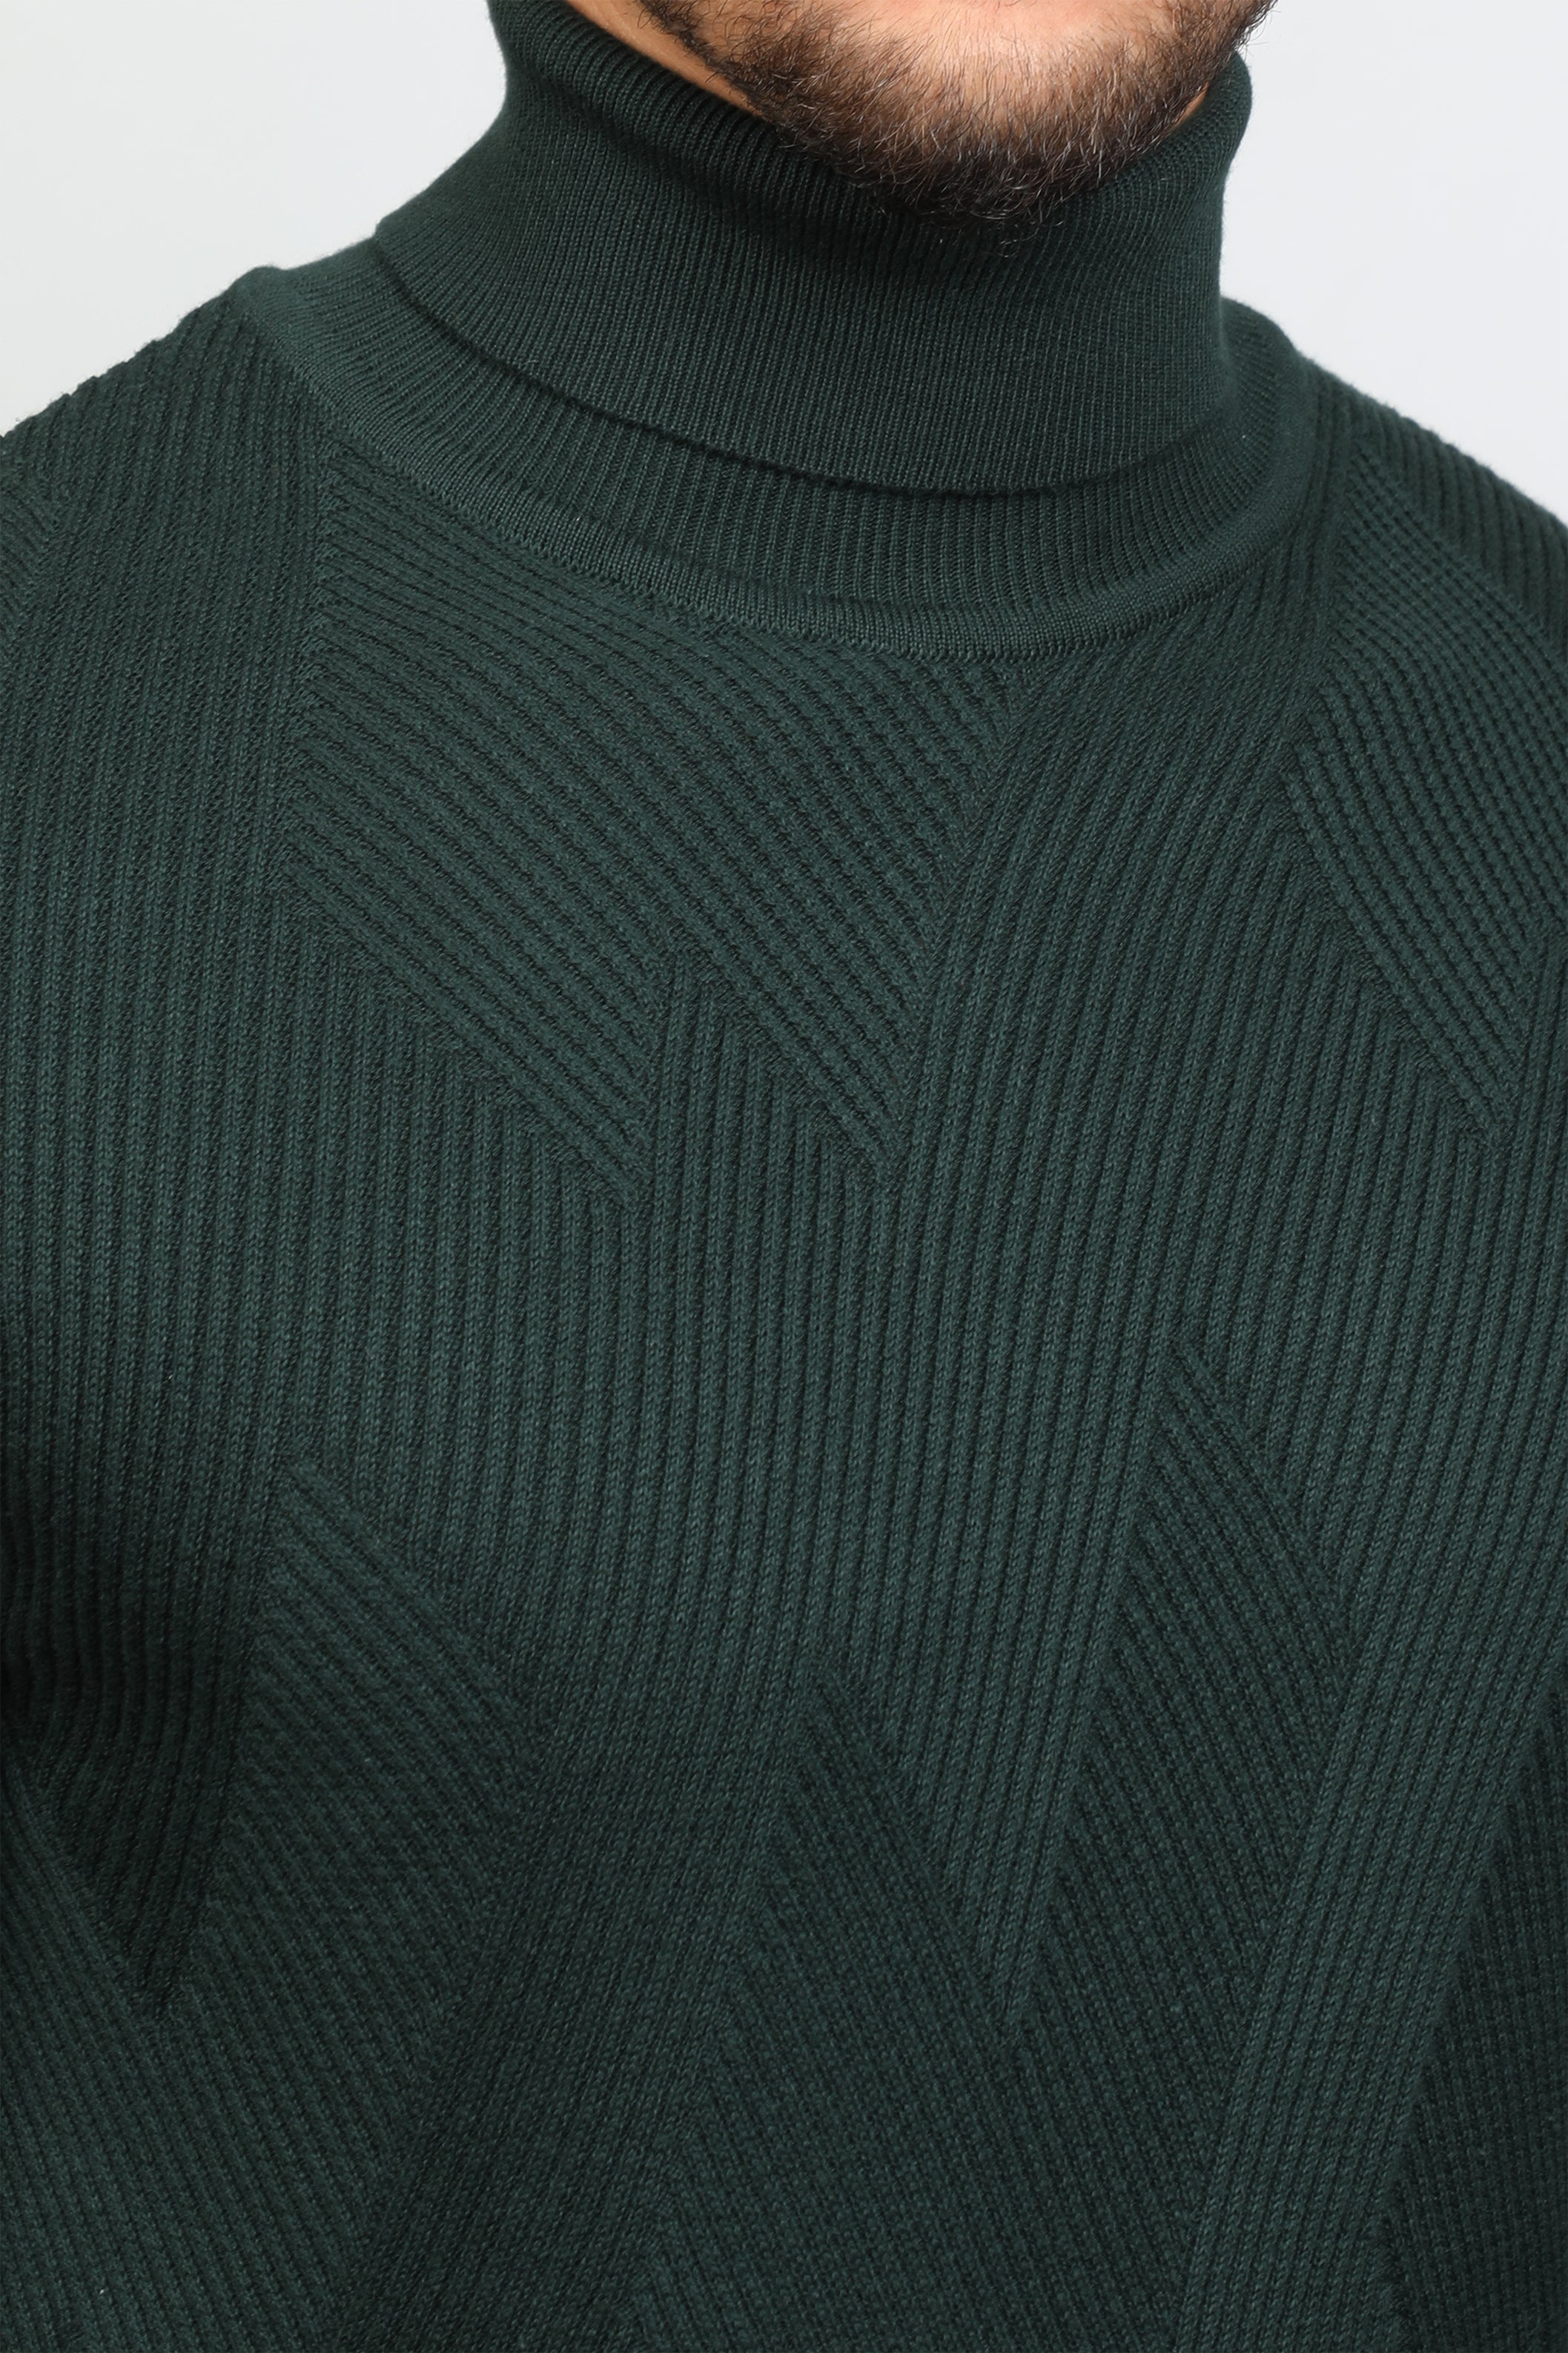 Men Classy Green Turtle Neck Patterned Sweater